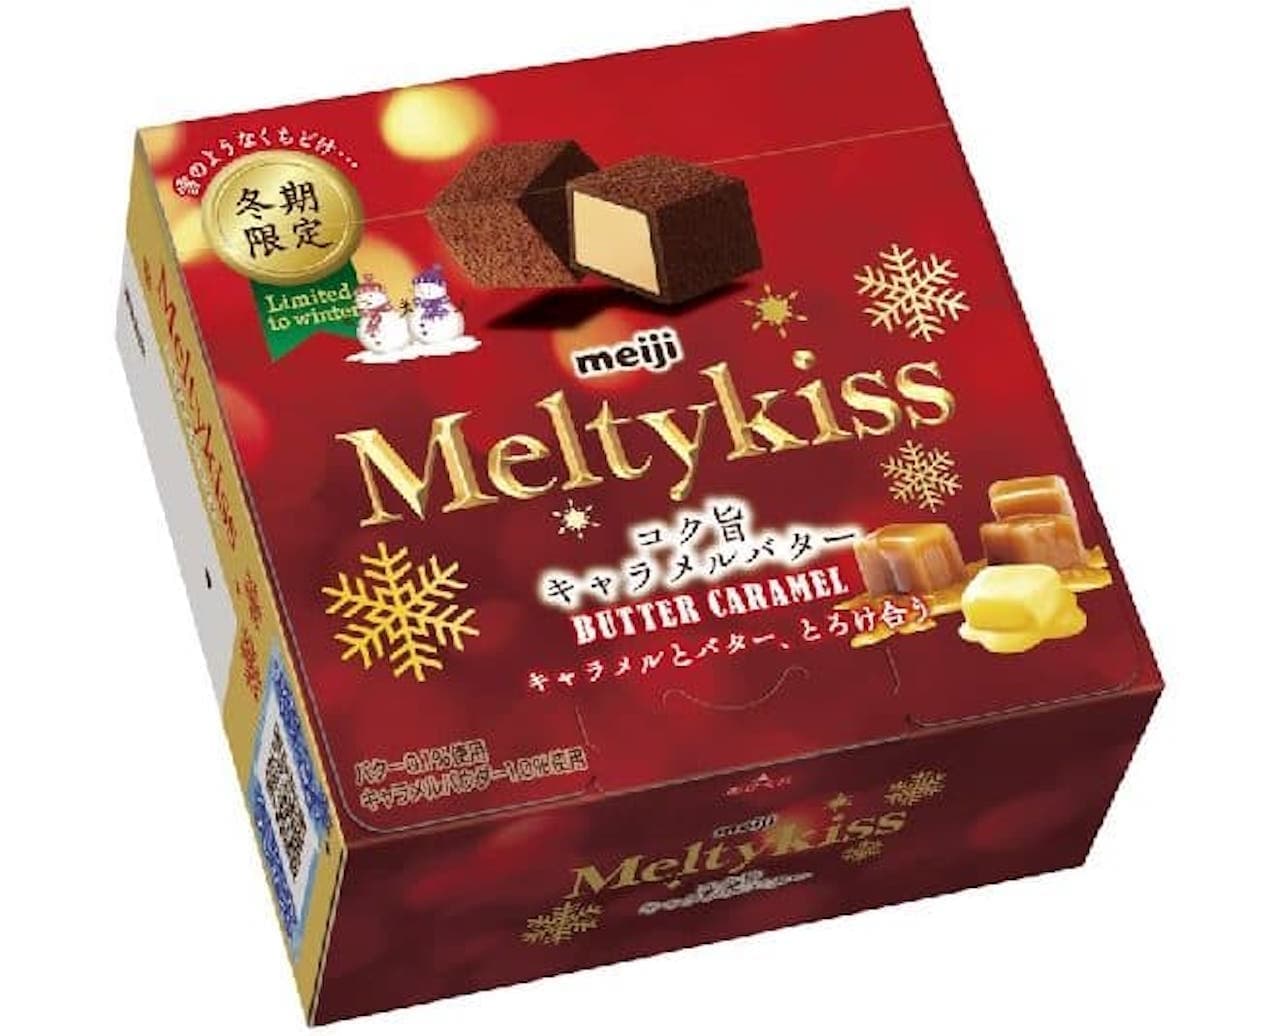 New chocolate "Melty kiss caramel butter"